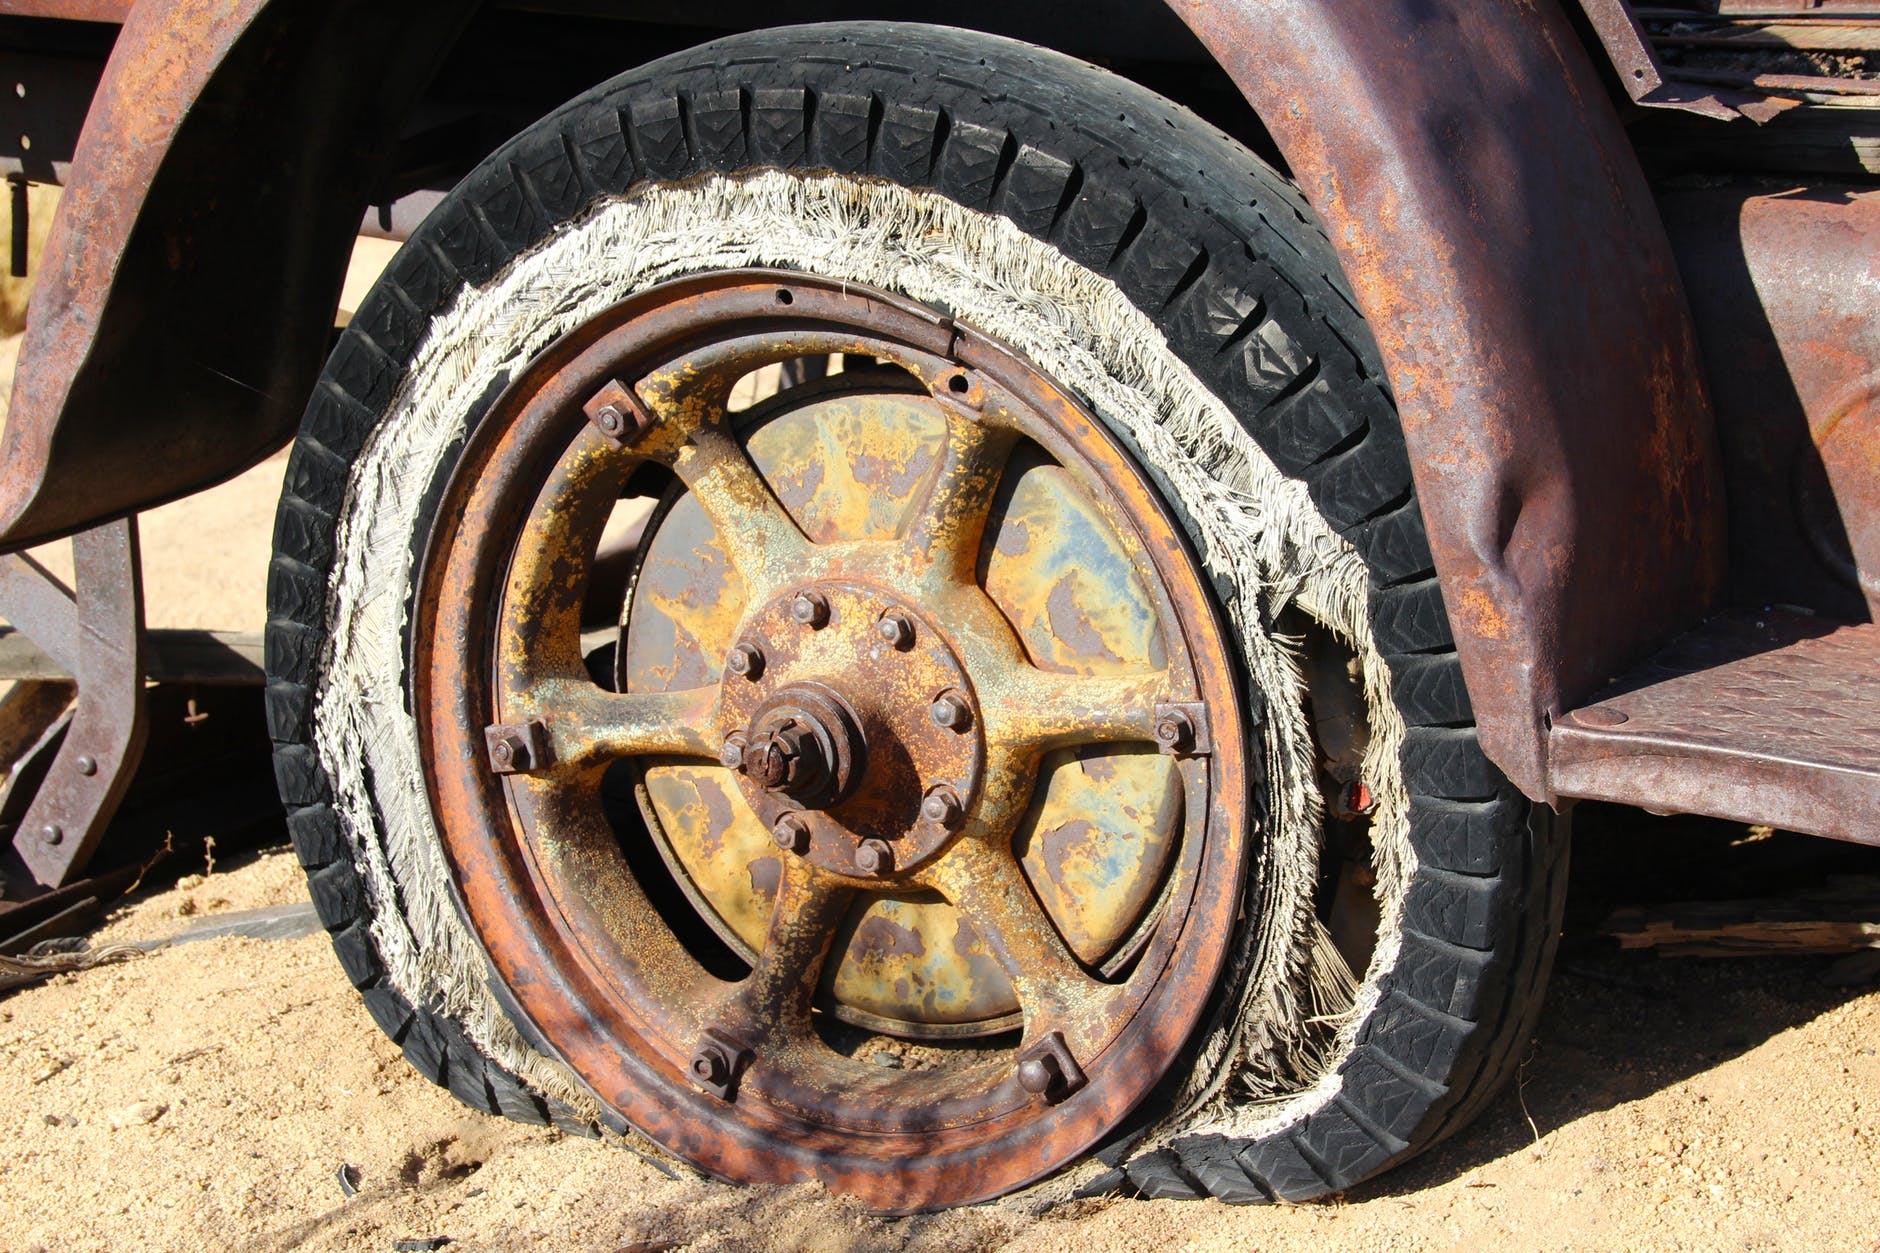 brown spoke car wheel in brown sand during daytime